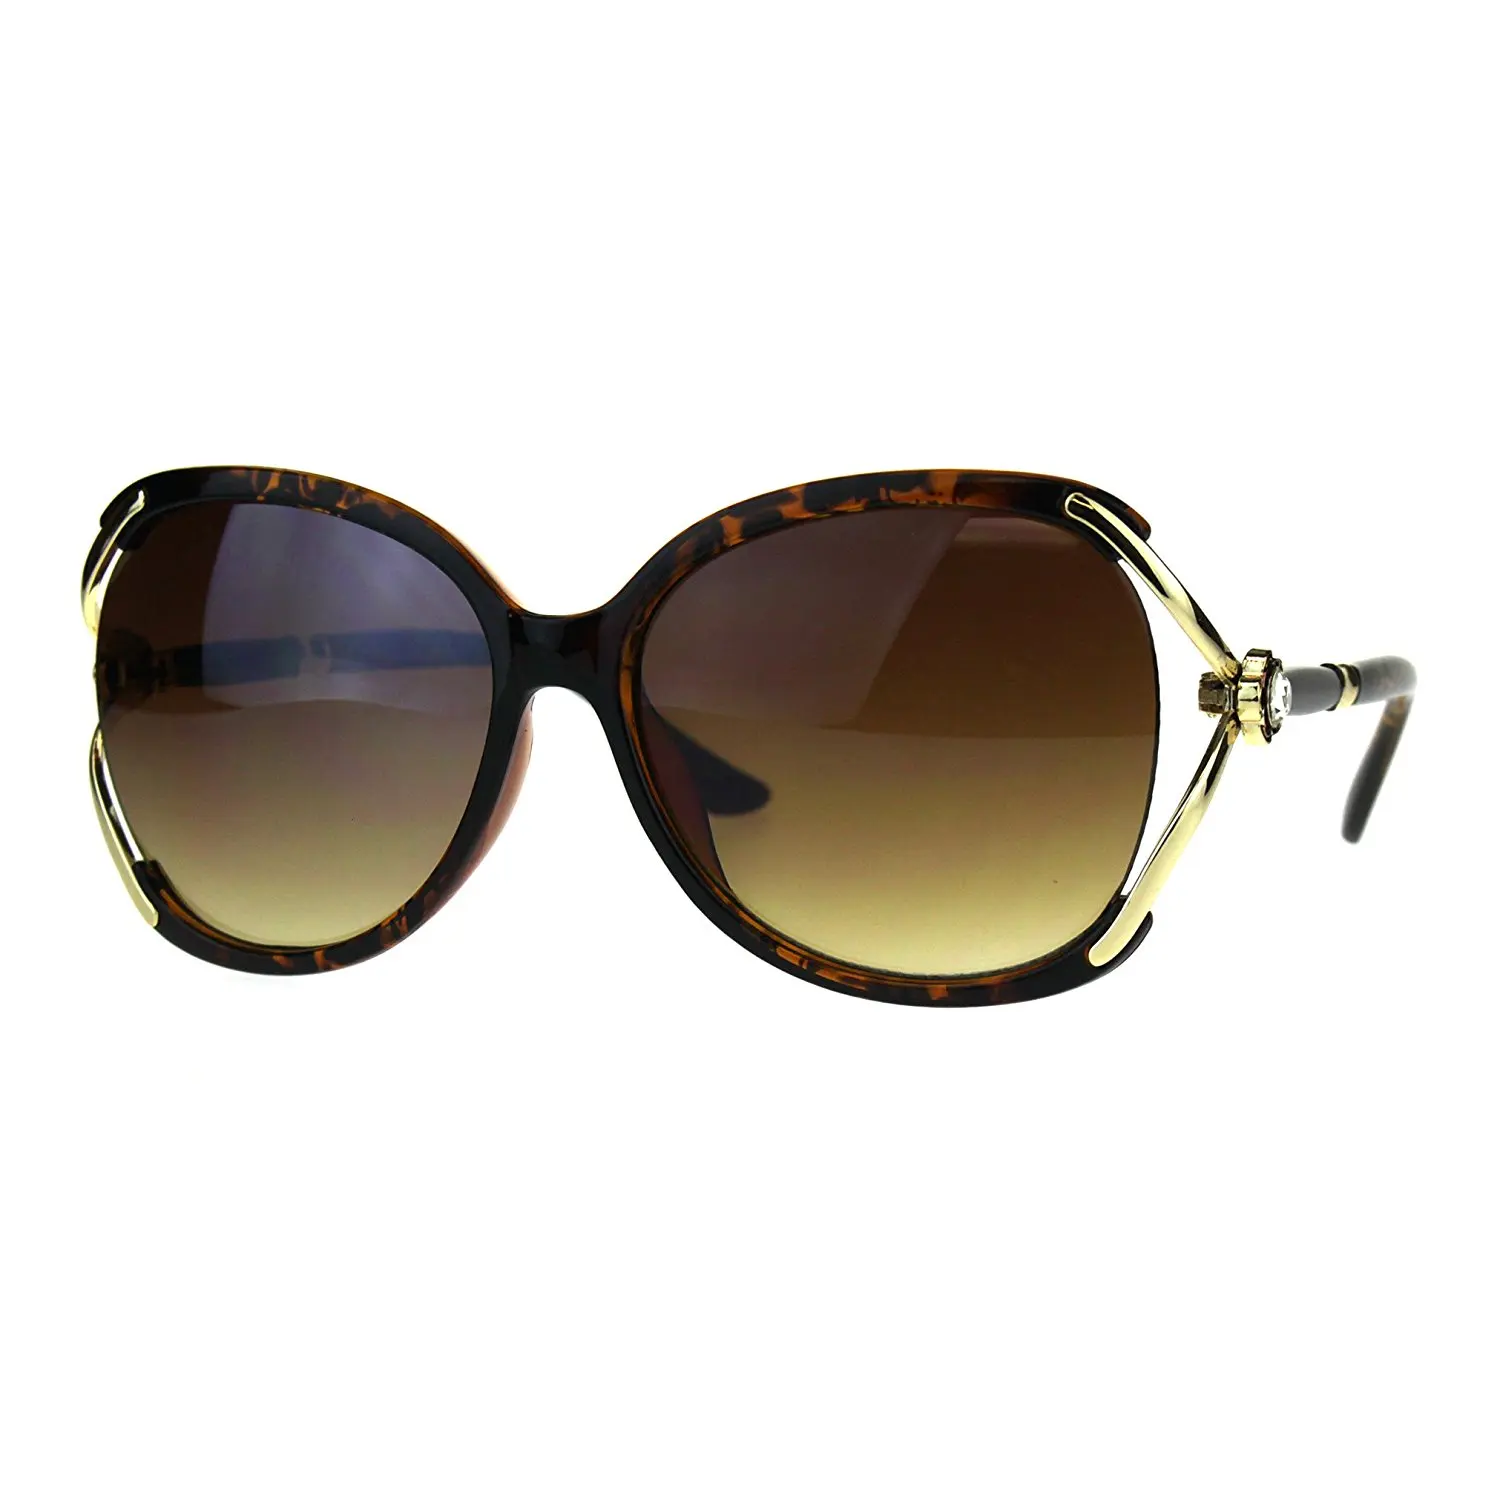 Cheap Diva Sunglasses, find Diva Sunglasses deals on line at Alibaba.com